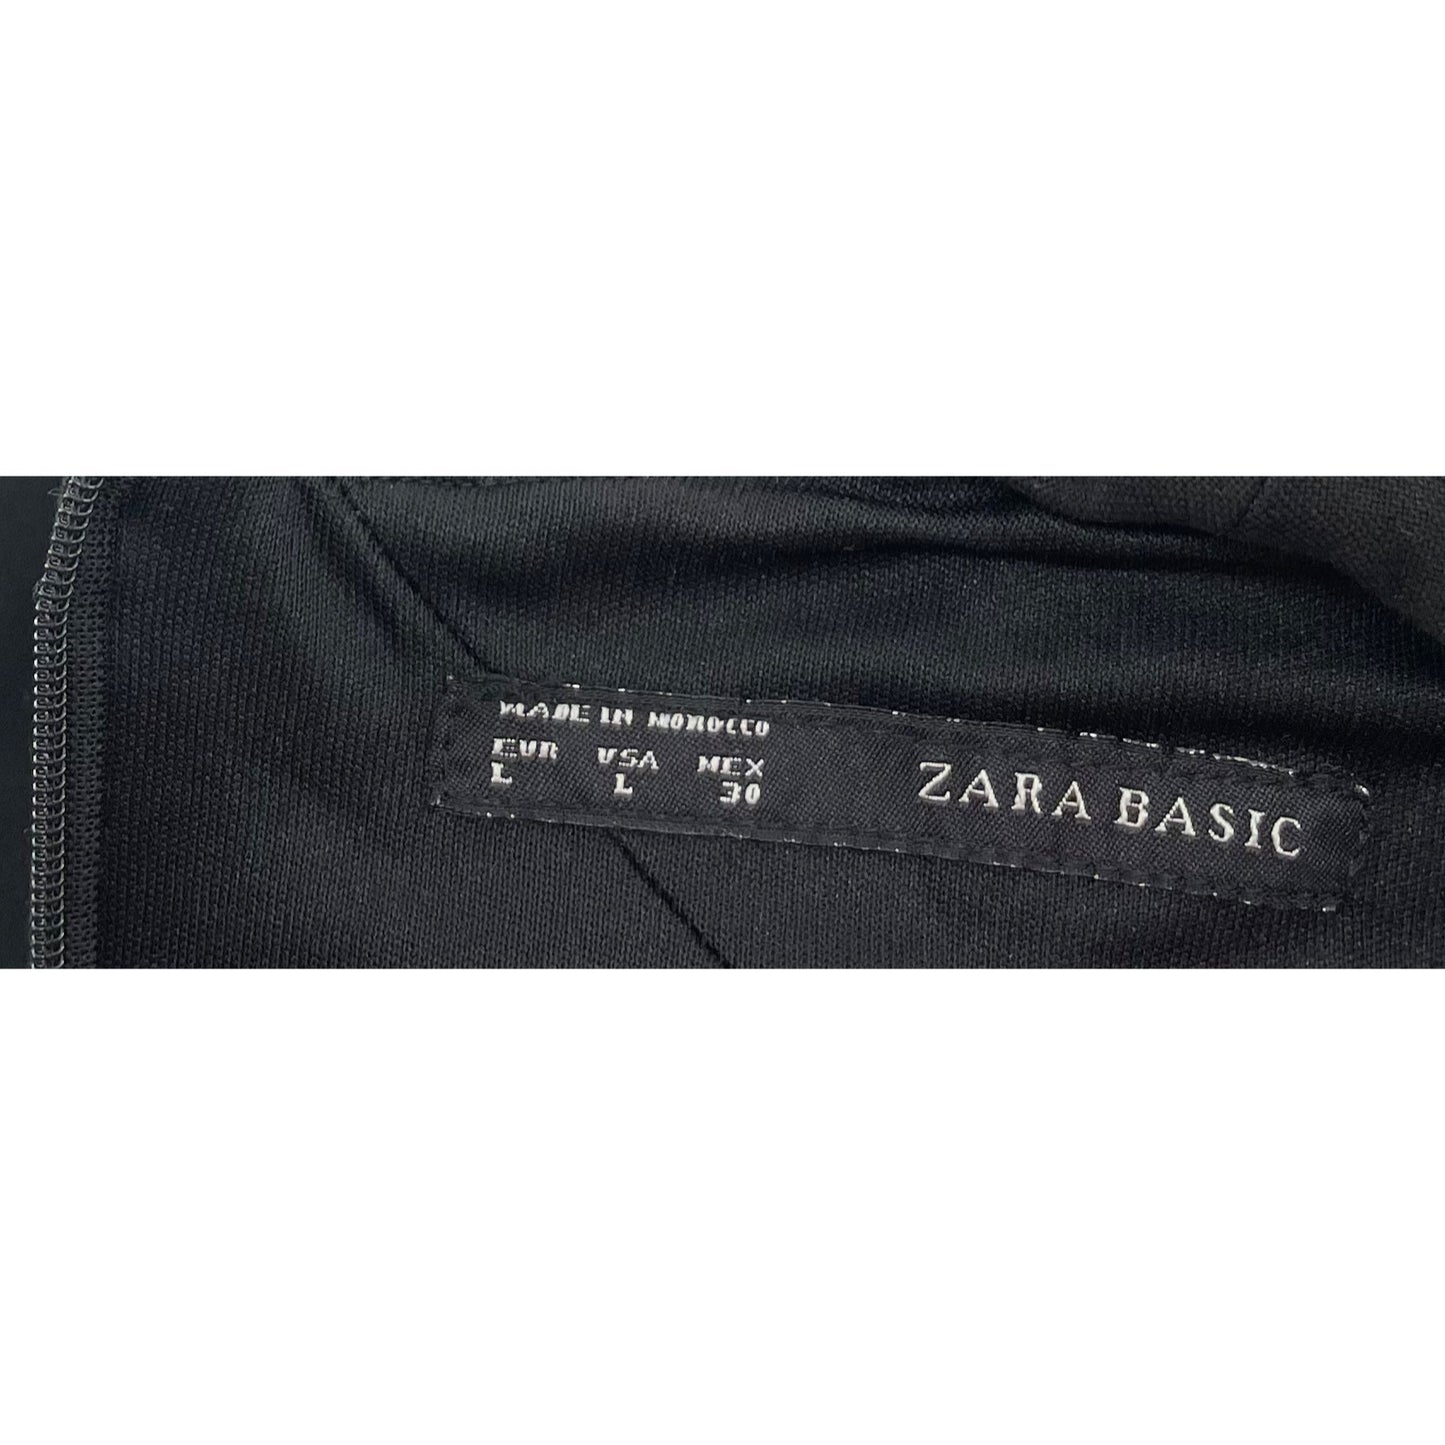 Zara Women's Size Large Black Sleeveless Padded Business Sheath Dress